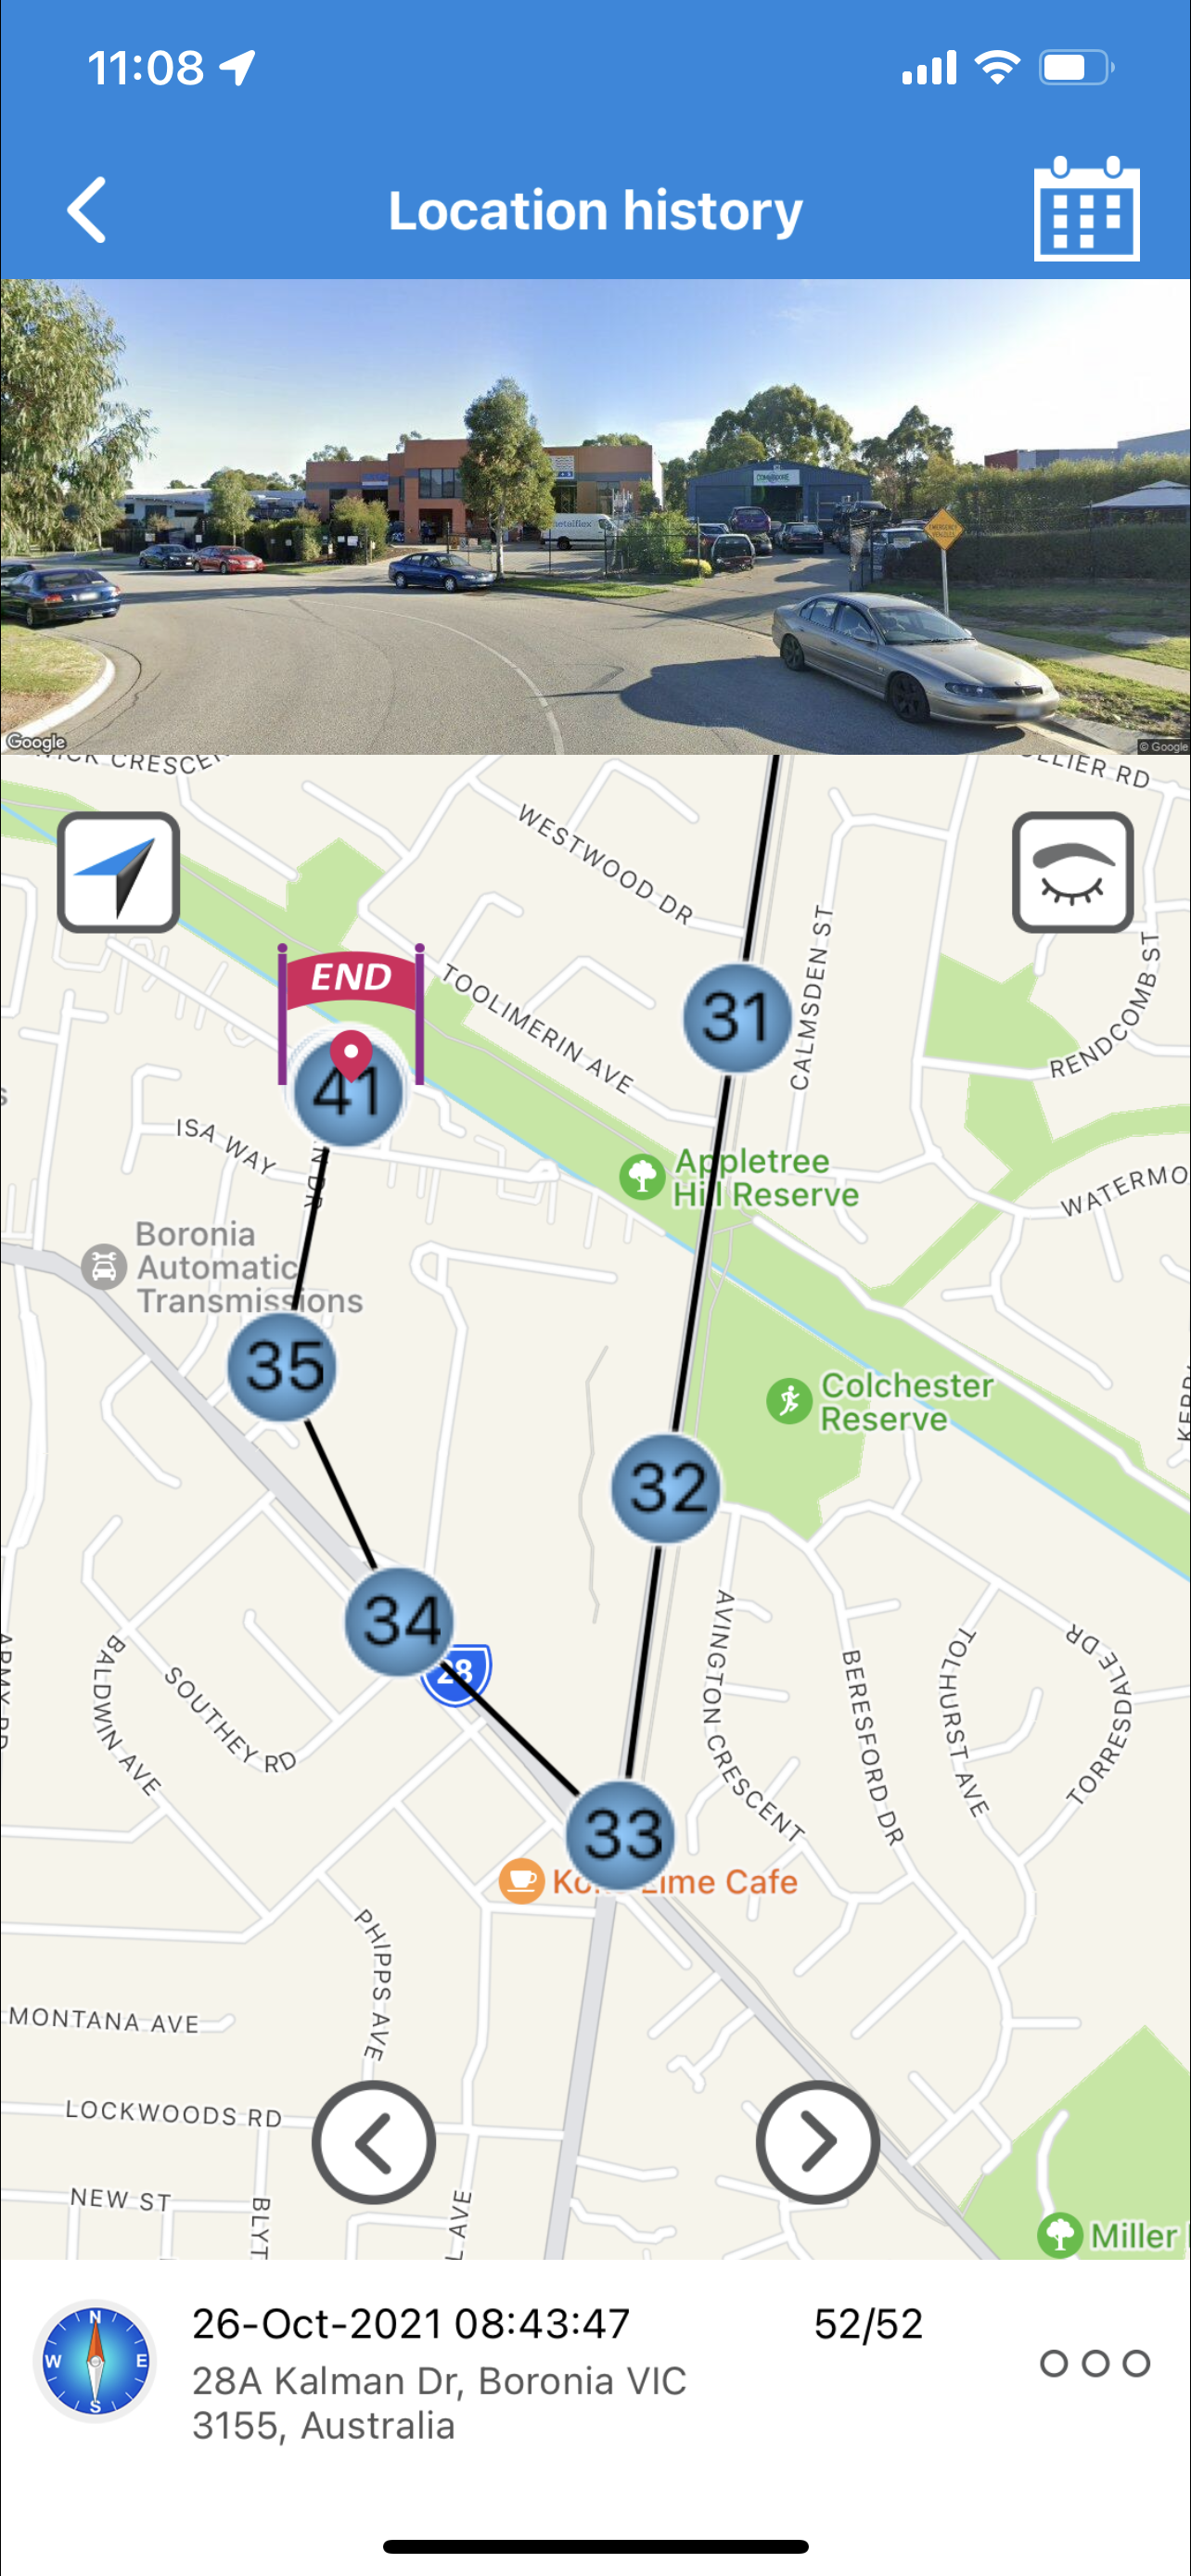 Livetrack Stealth GPS Tracker